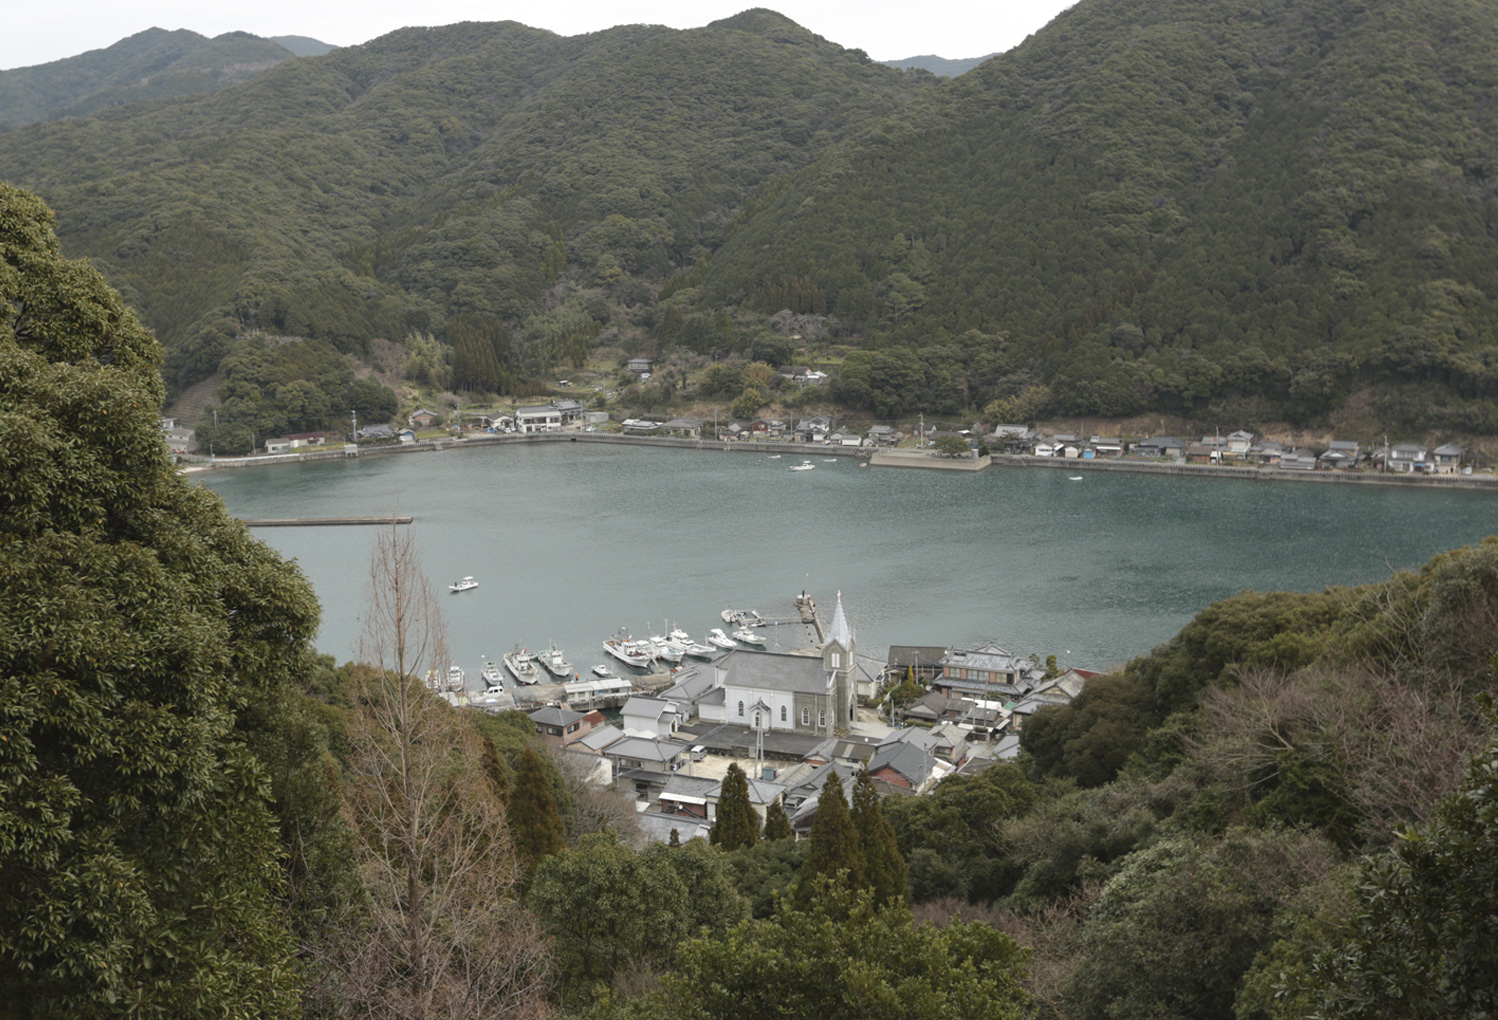 The village of Sakitsu on the Youkaku Bay